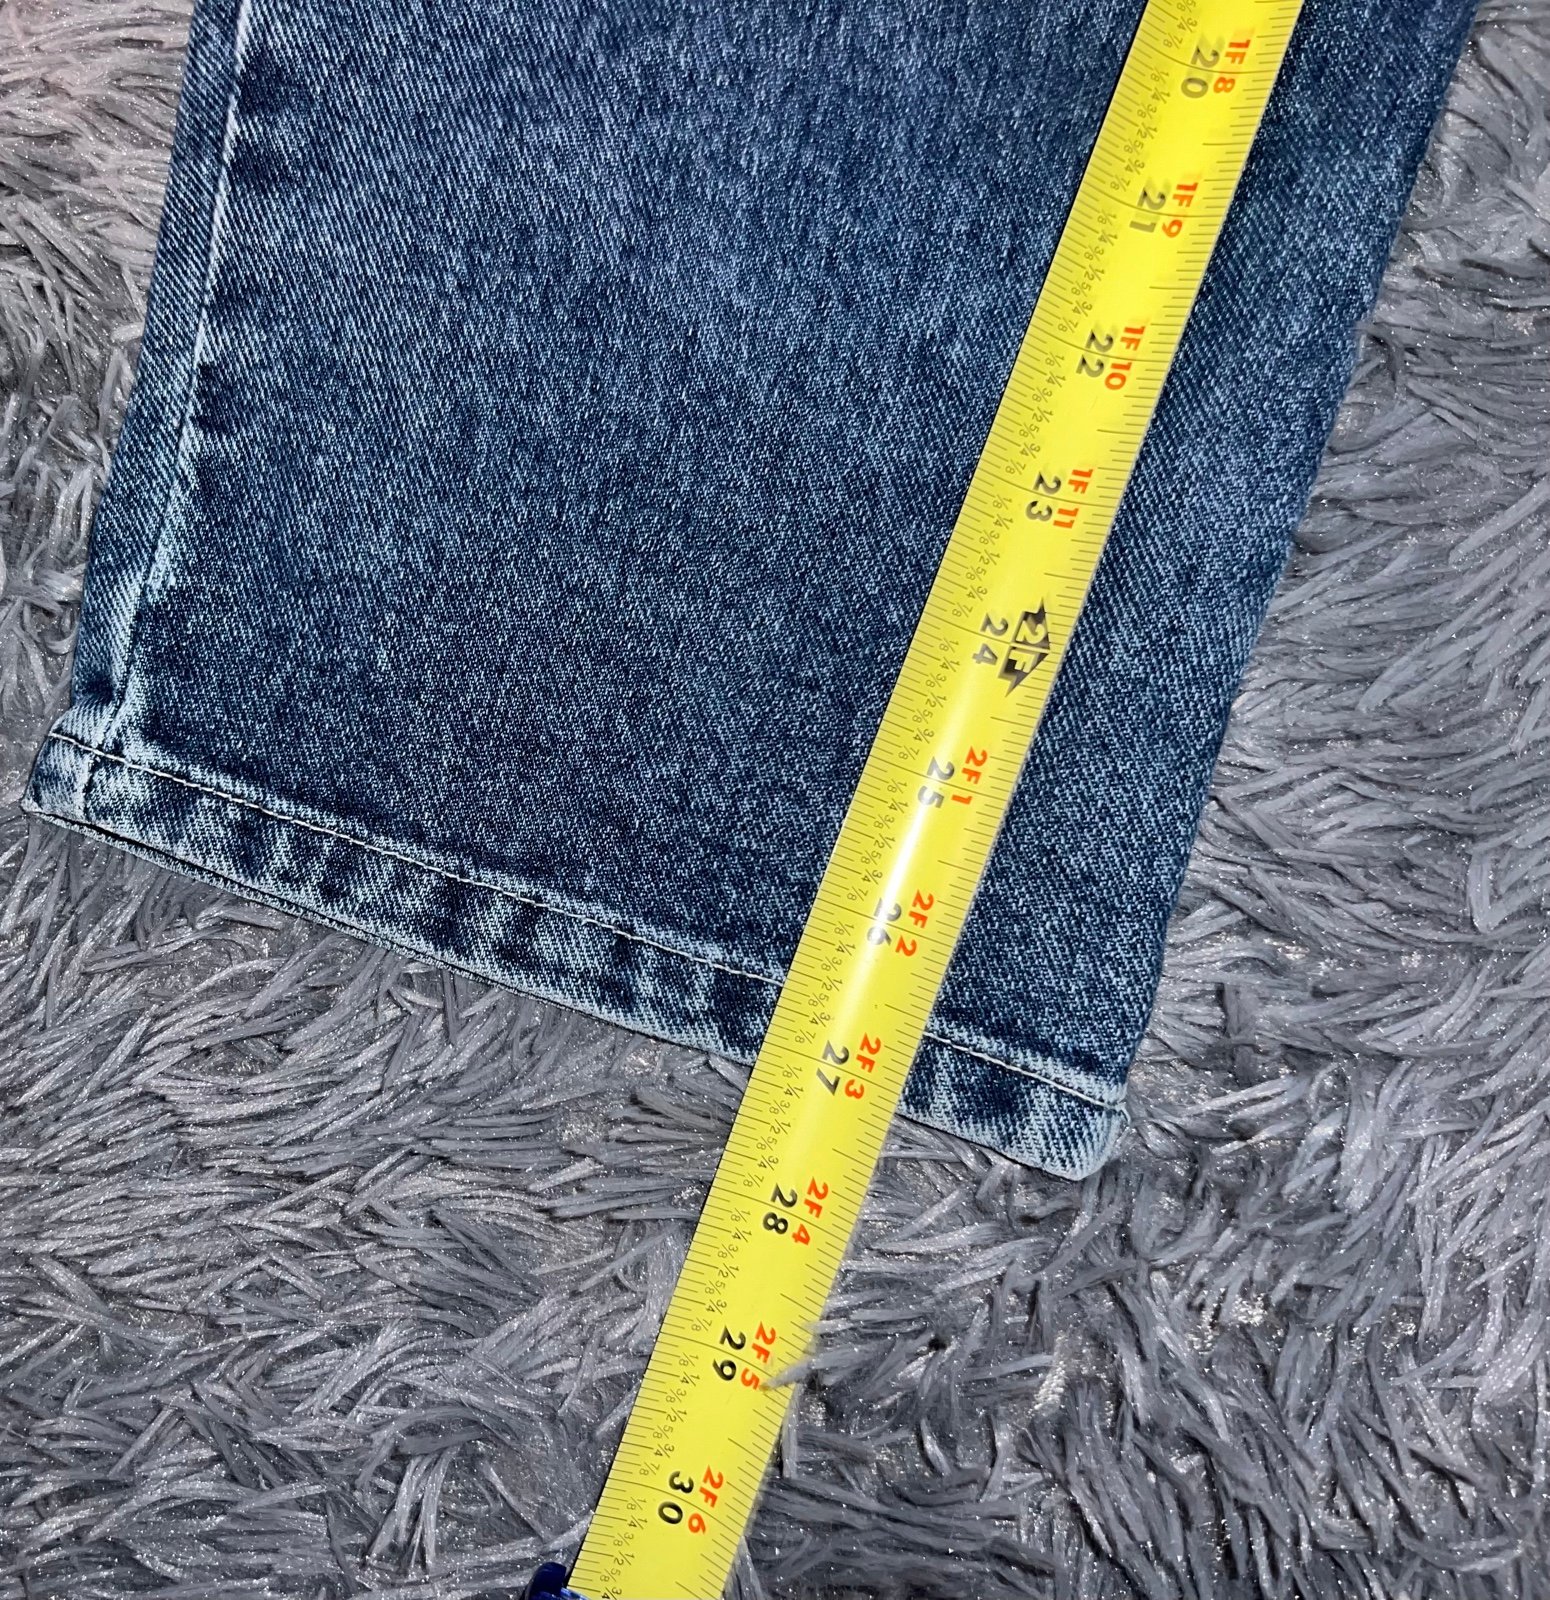 Personality Blue jeans, capris new mqhS6YVGE Fashion